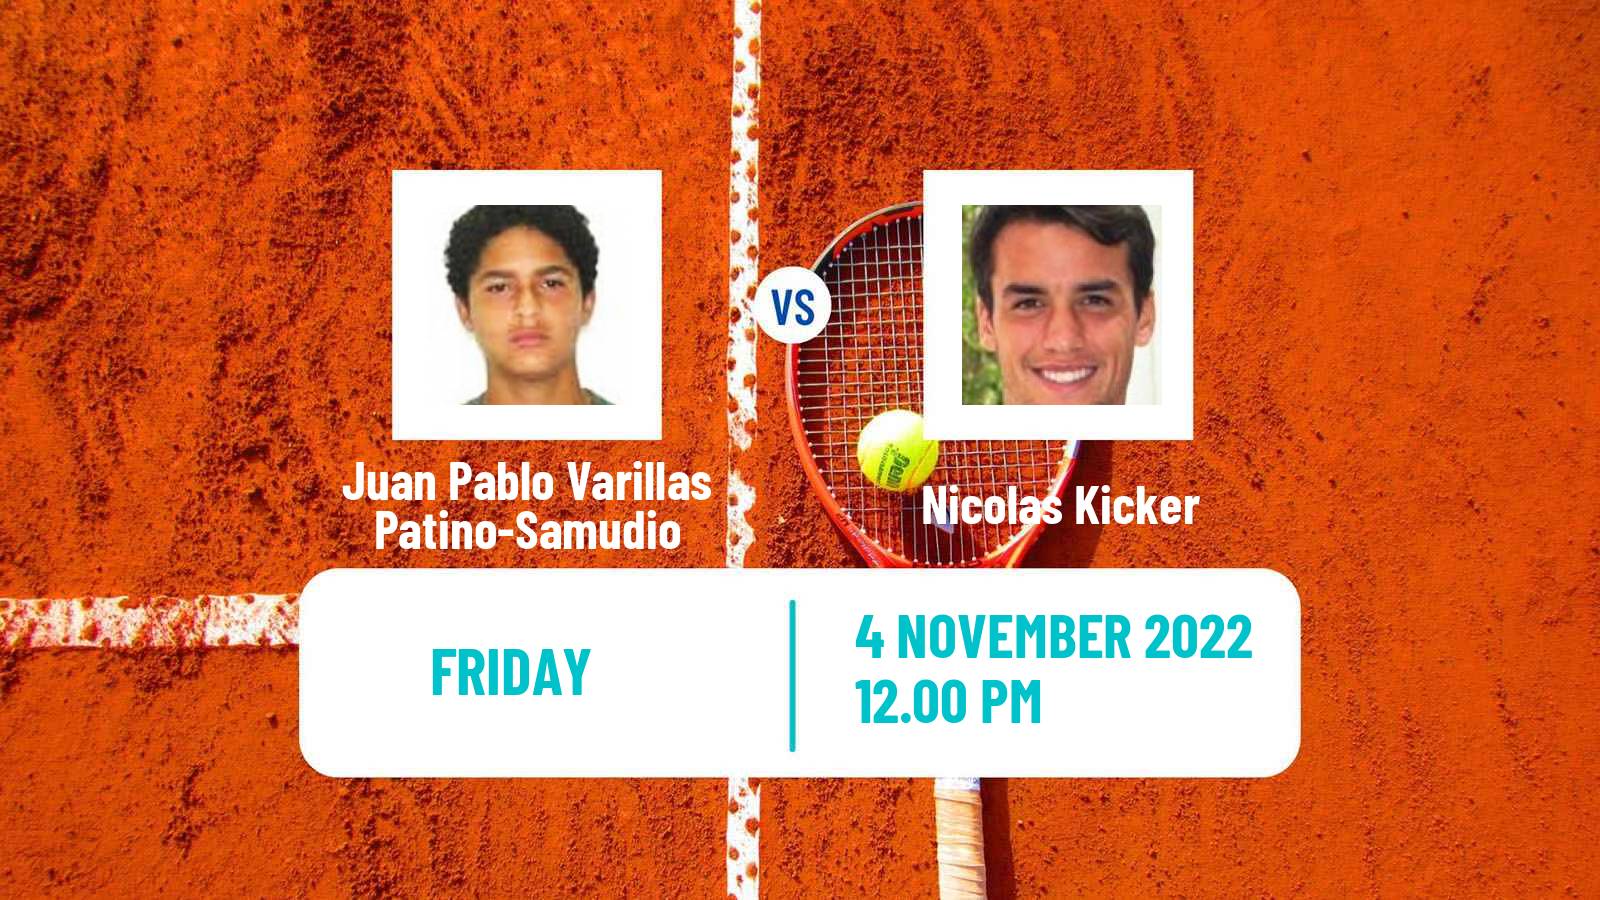 Tennis ATP Challenger Juan Pablo Varillas Patino-Samudio - Nicolas Kicker